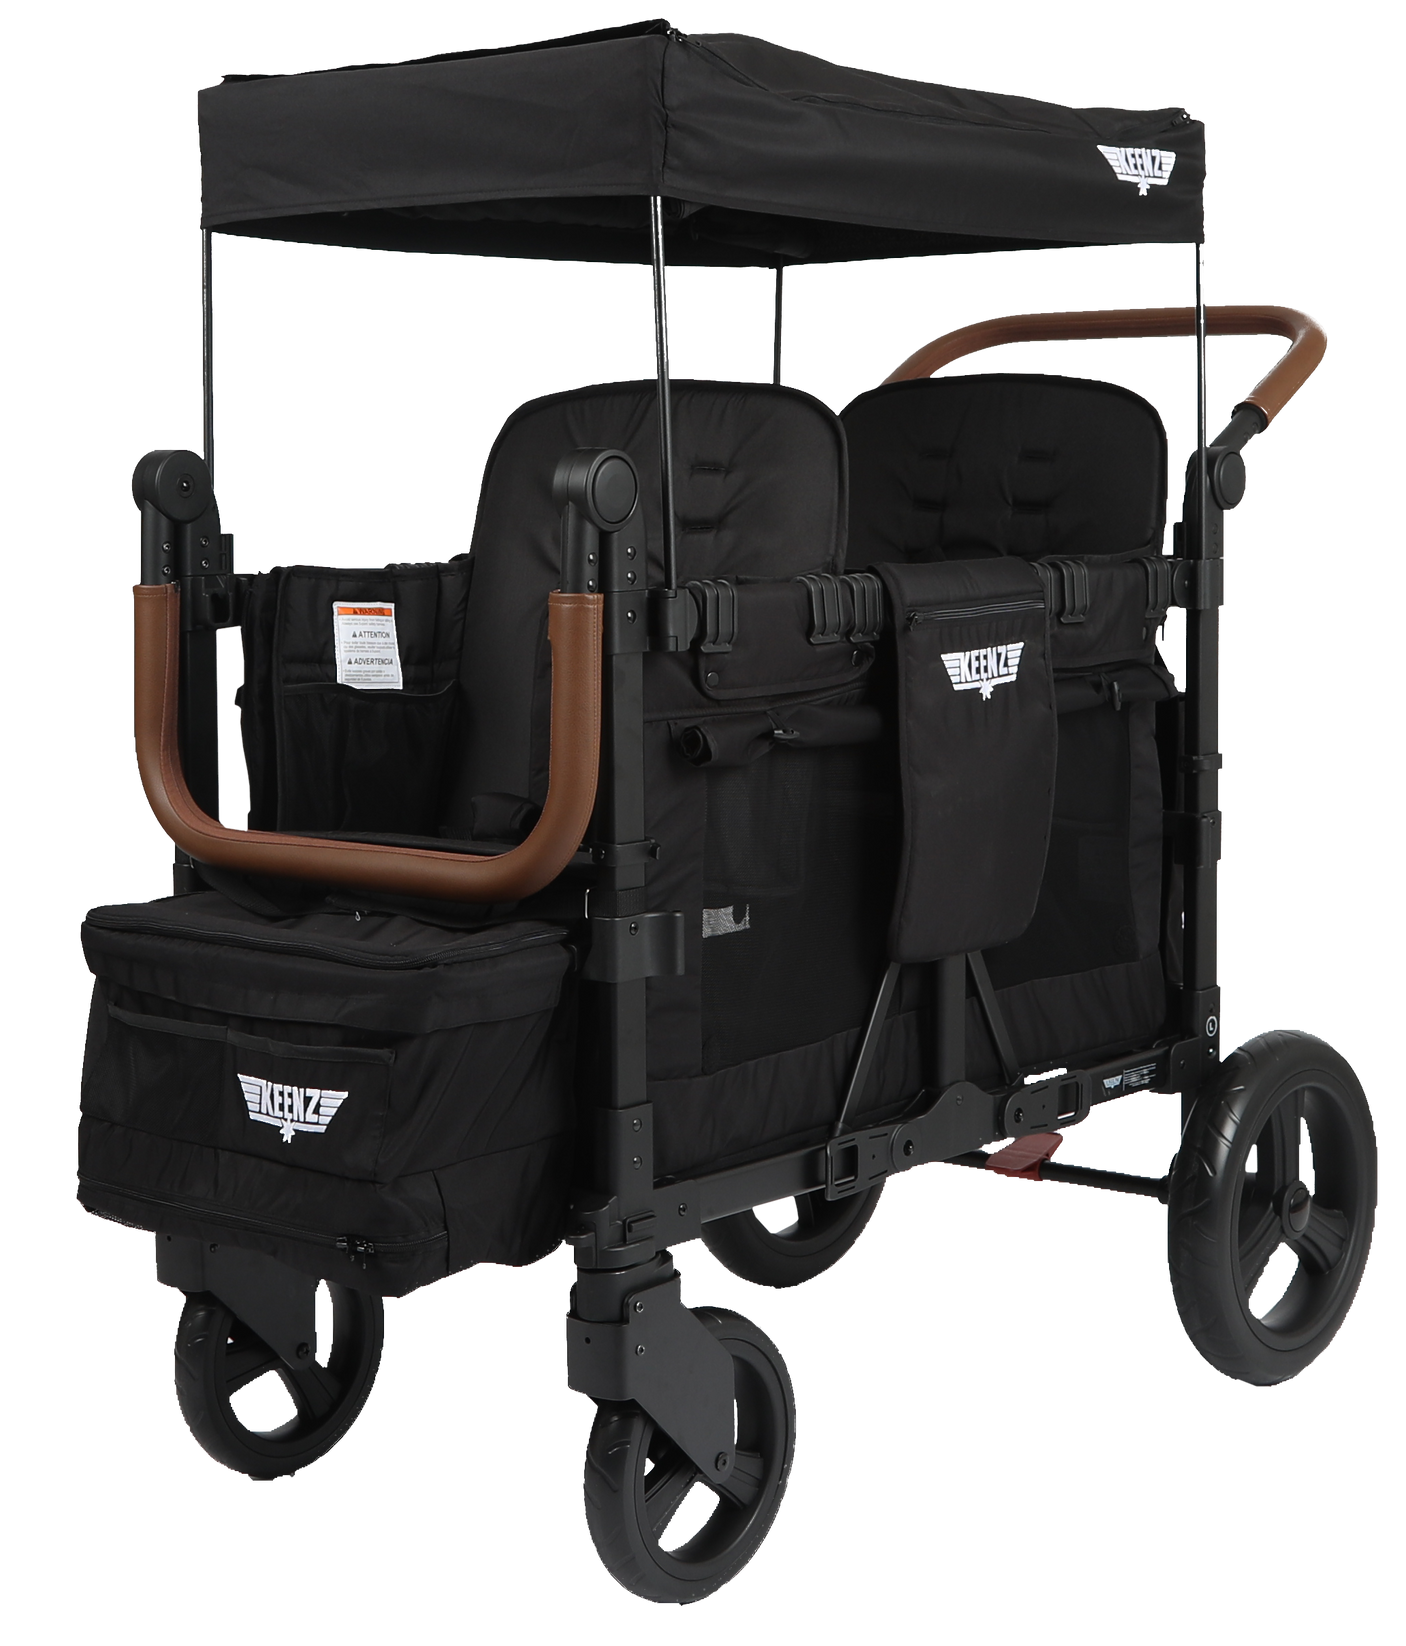 Keenz Vyo͞o The Seating Chameleon Stroller Wagon 2-Passengers